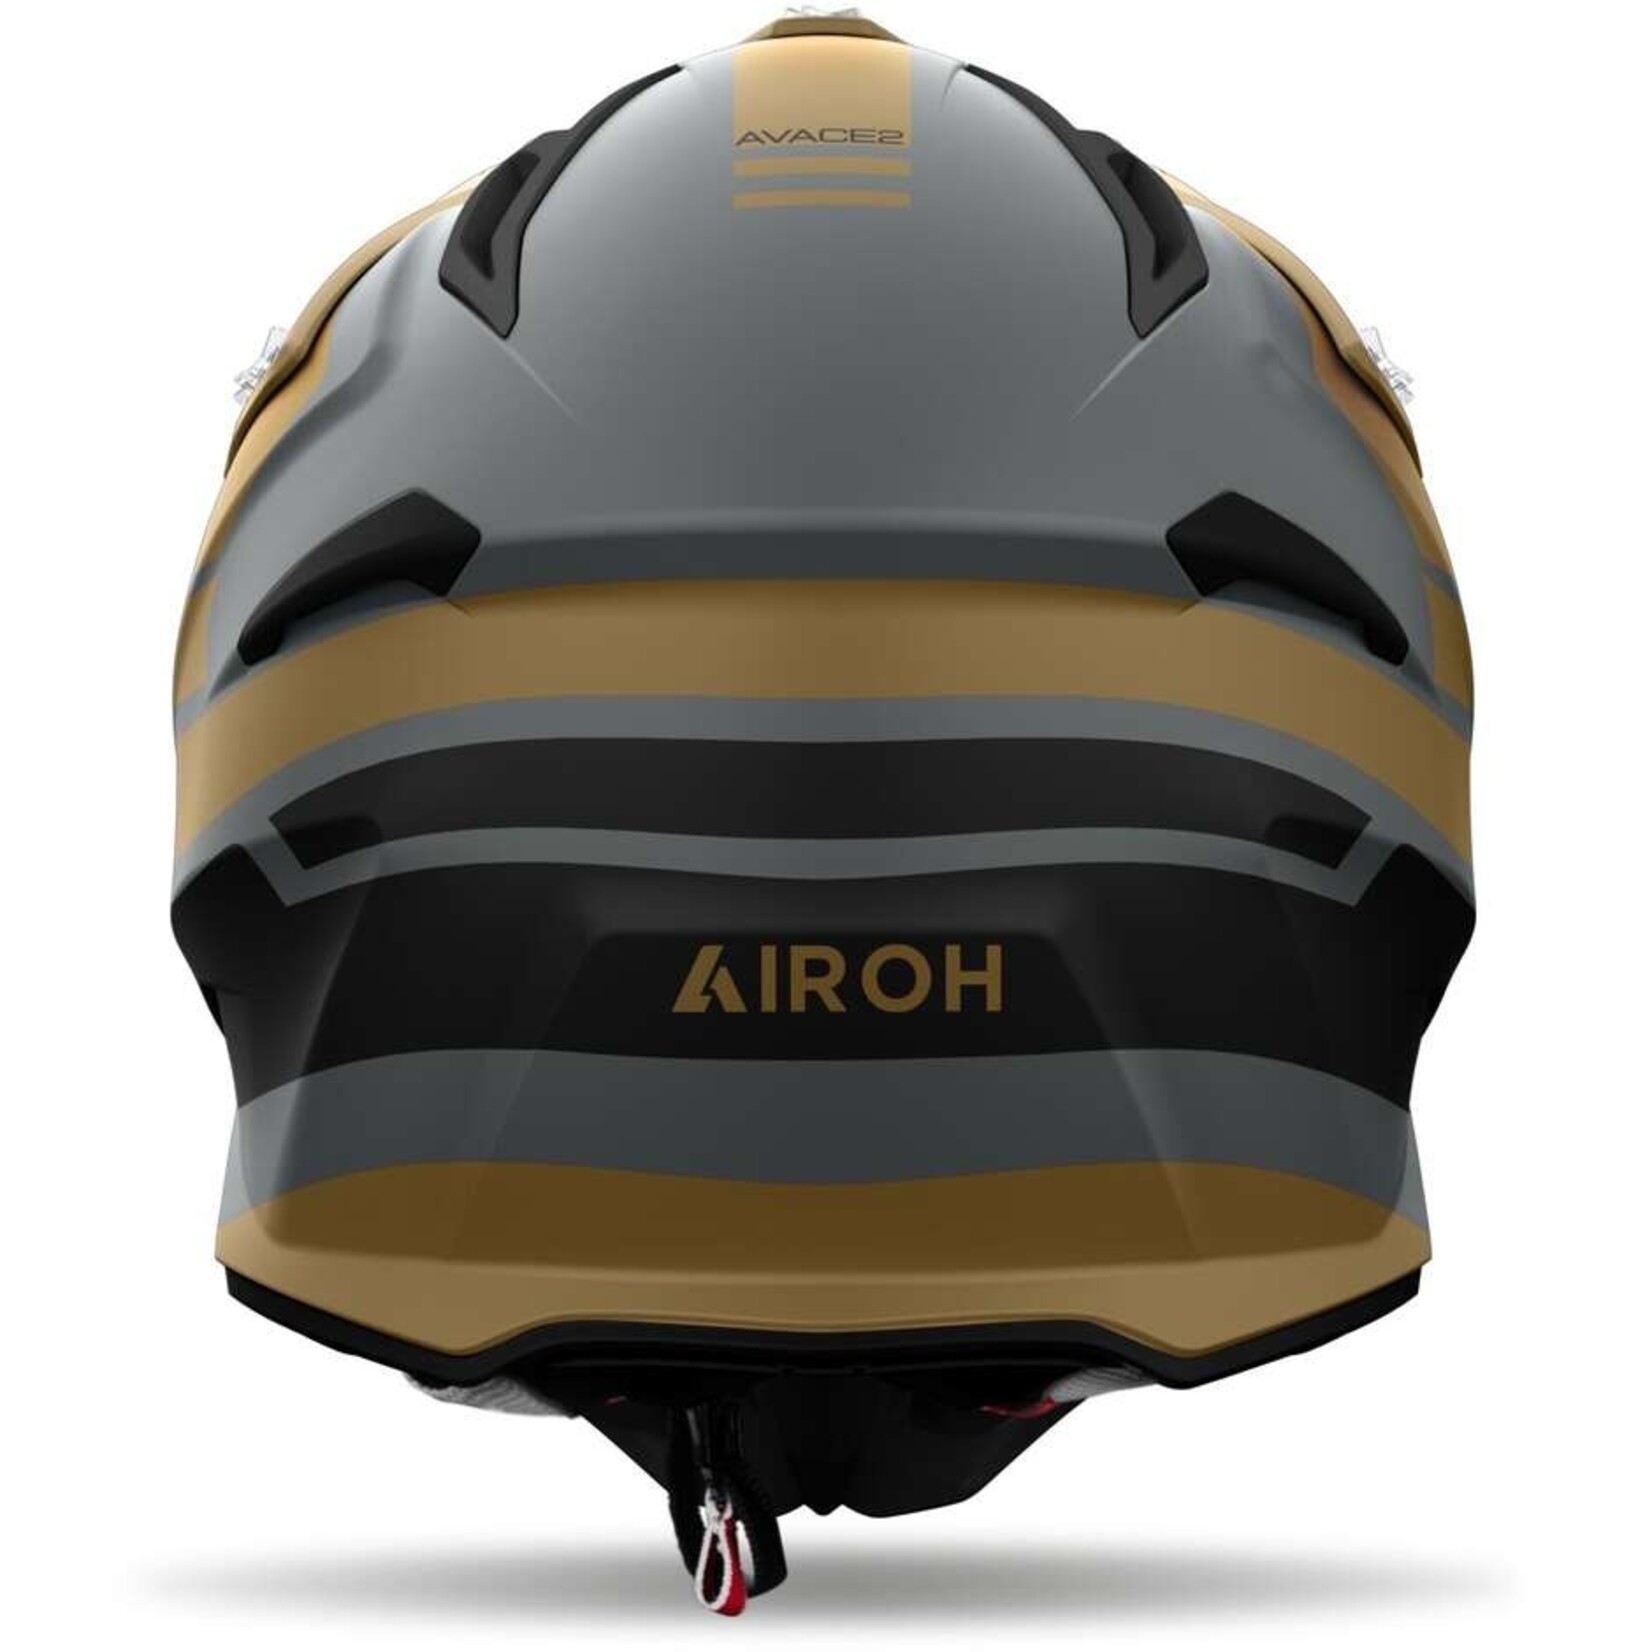 Airoh Airoh Helm Aviator Ace 2 Sake goud mat